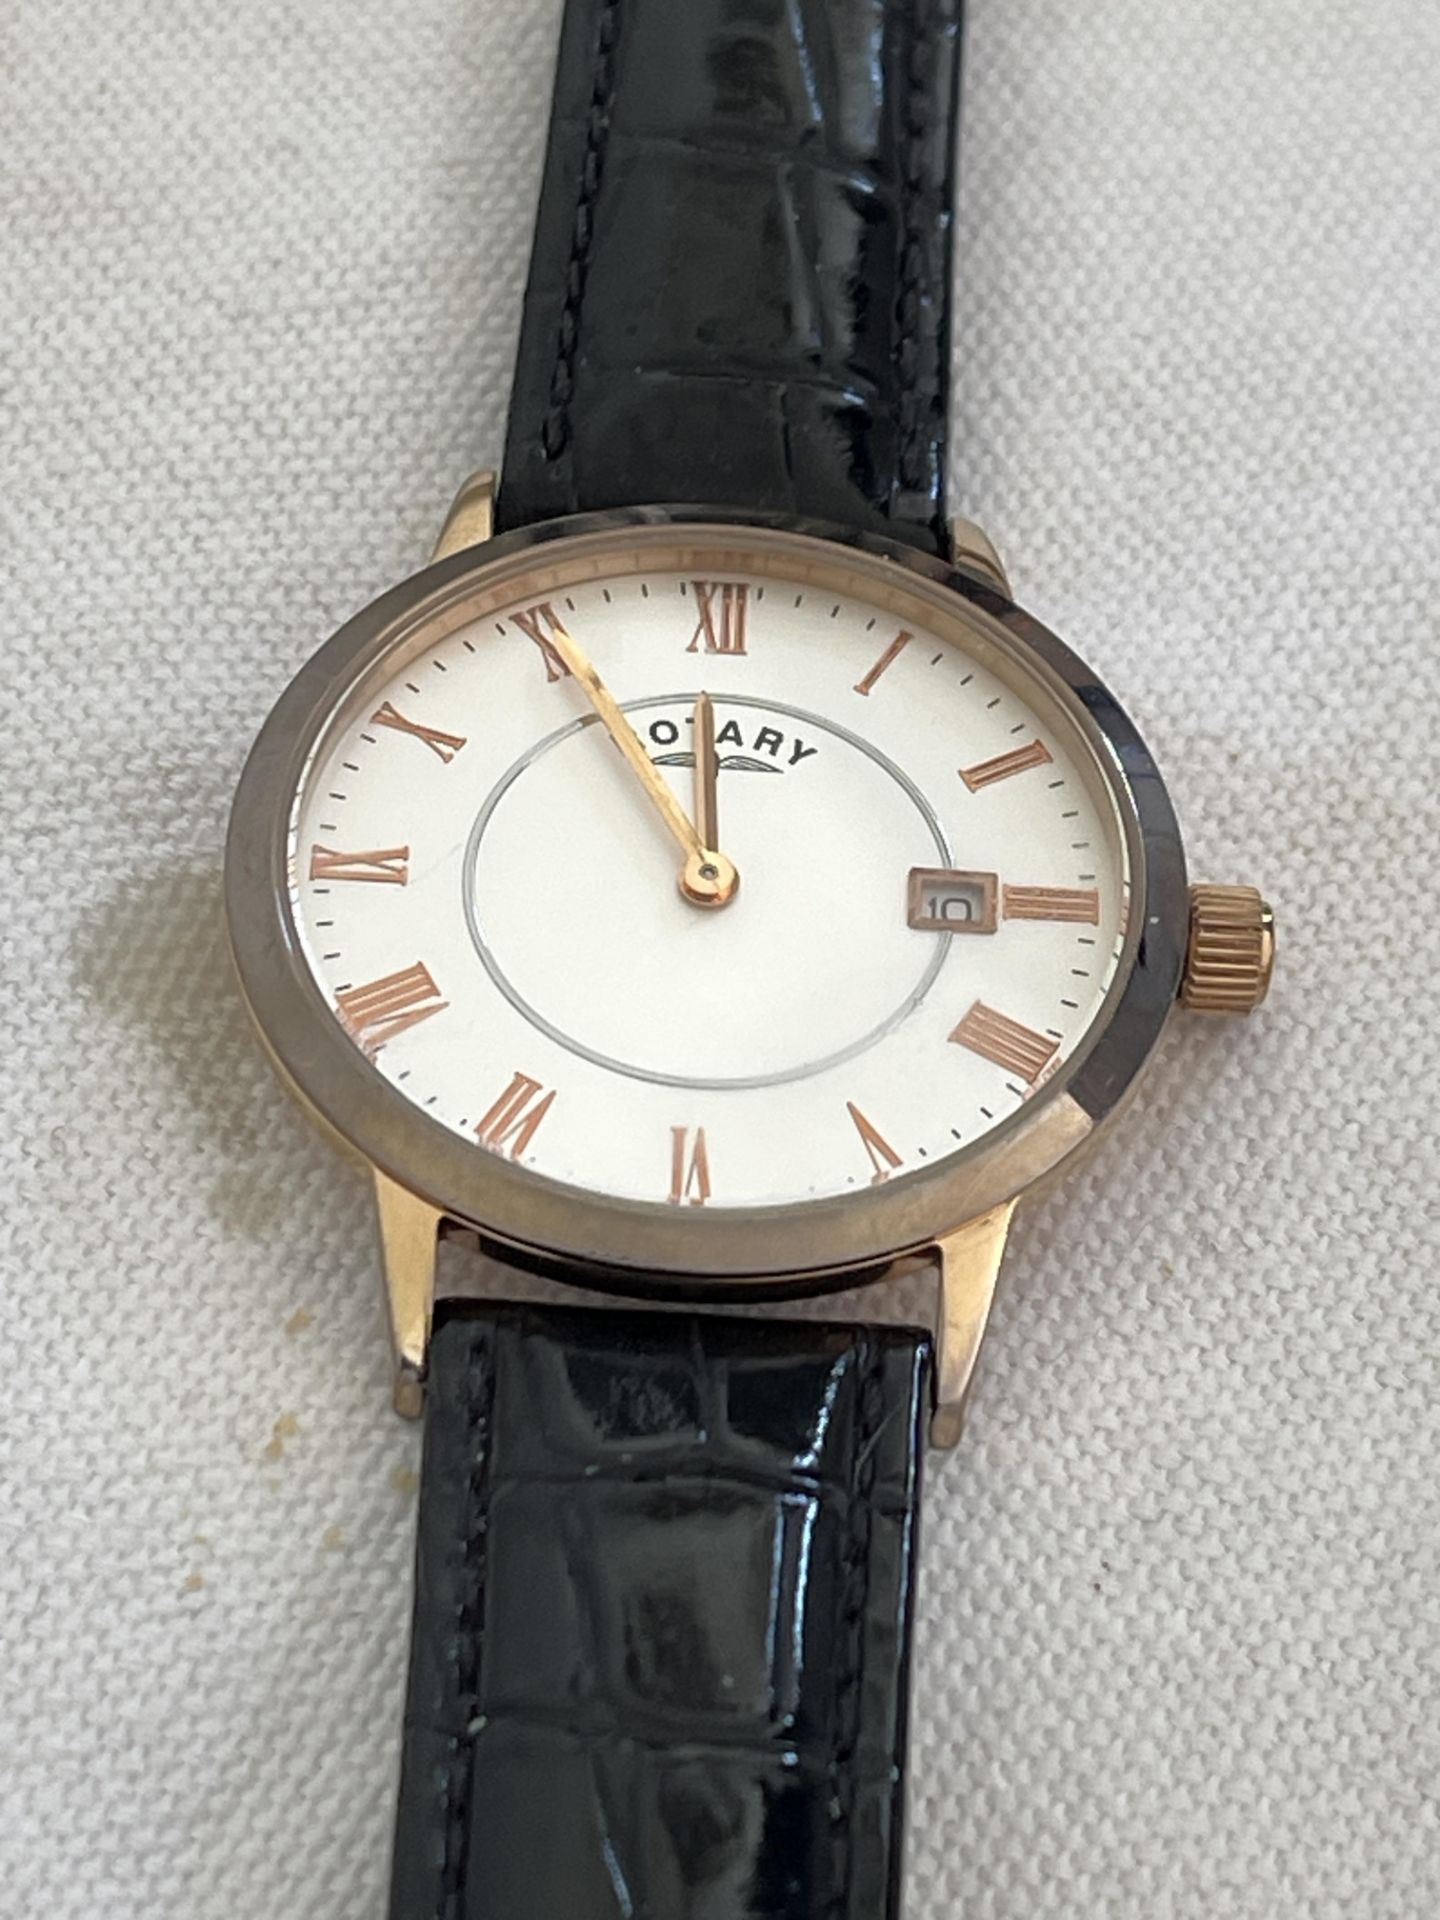 Rotary men's slim quartz watch - Image 2 of 9